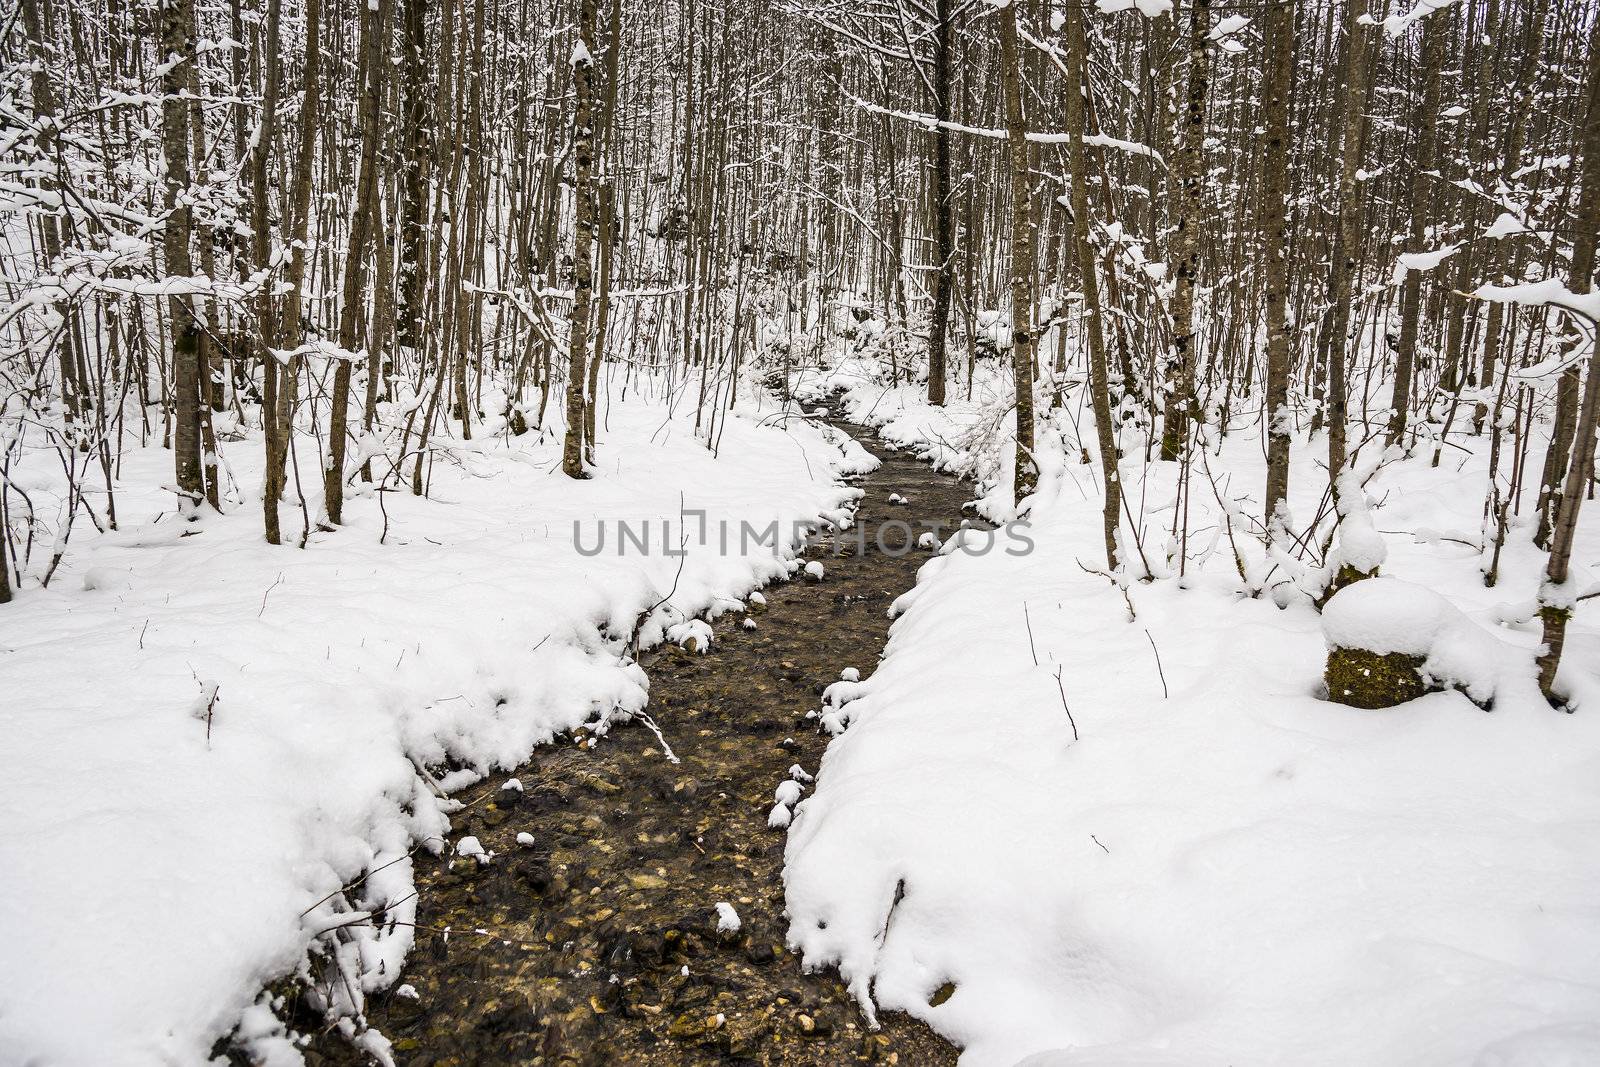 Creek in winter forest by w20er